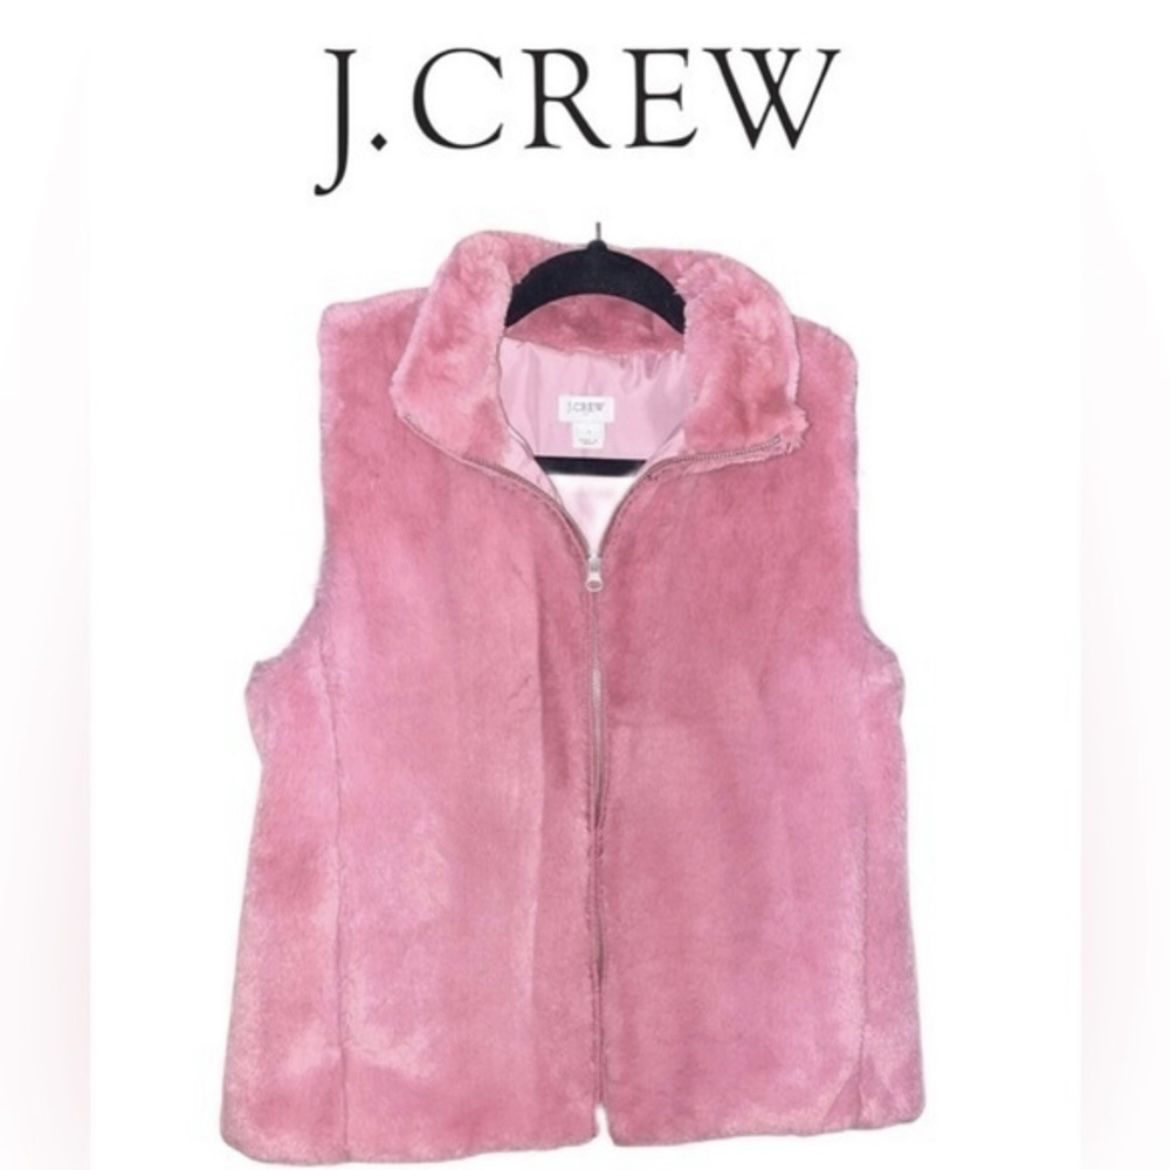 J.CREW Women's Pink Plush Faux Fur Full Zip Winter Vest Size Small